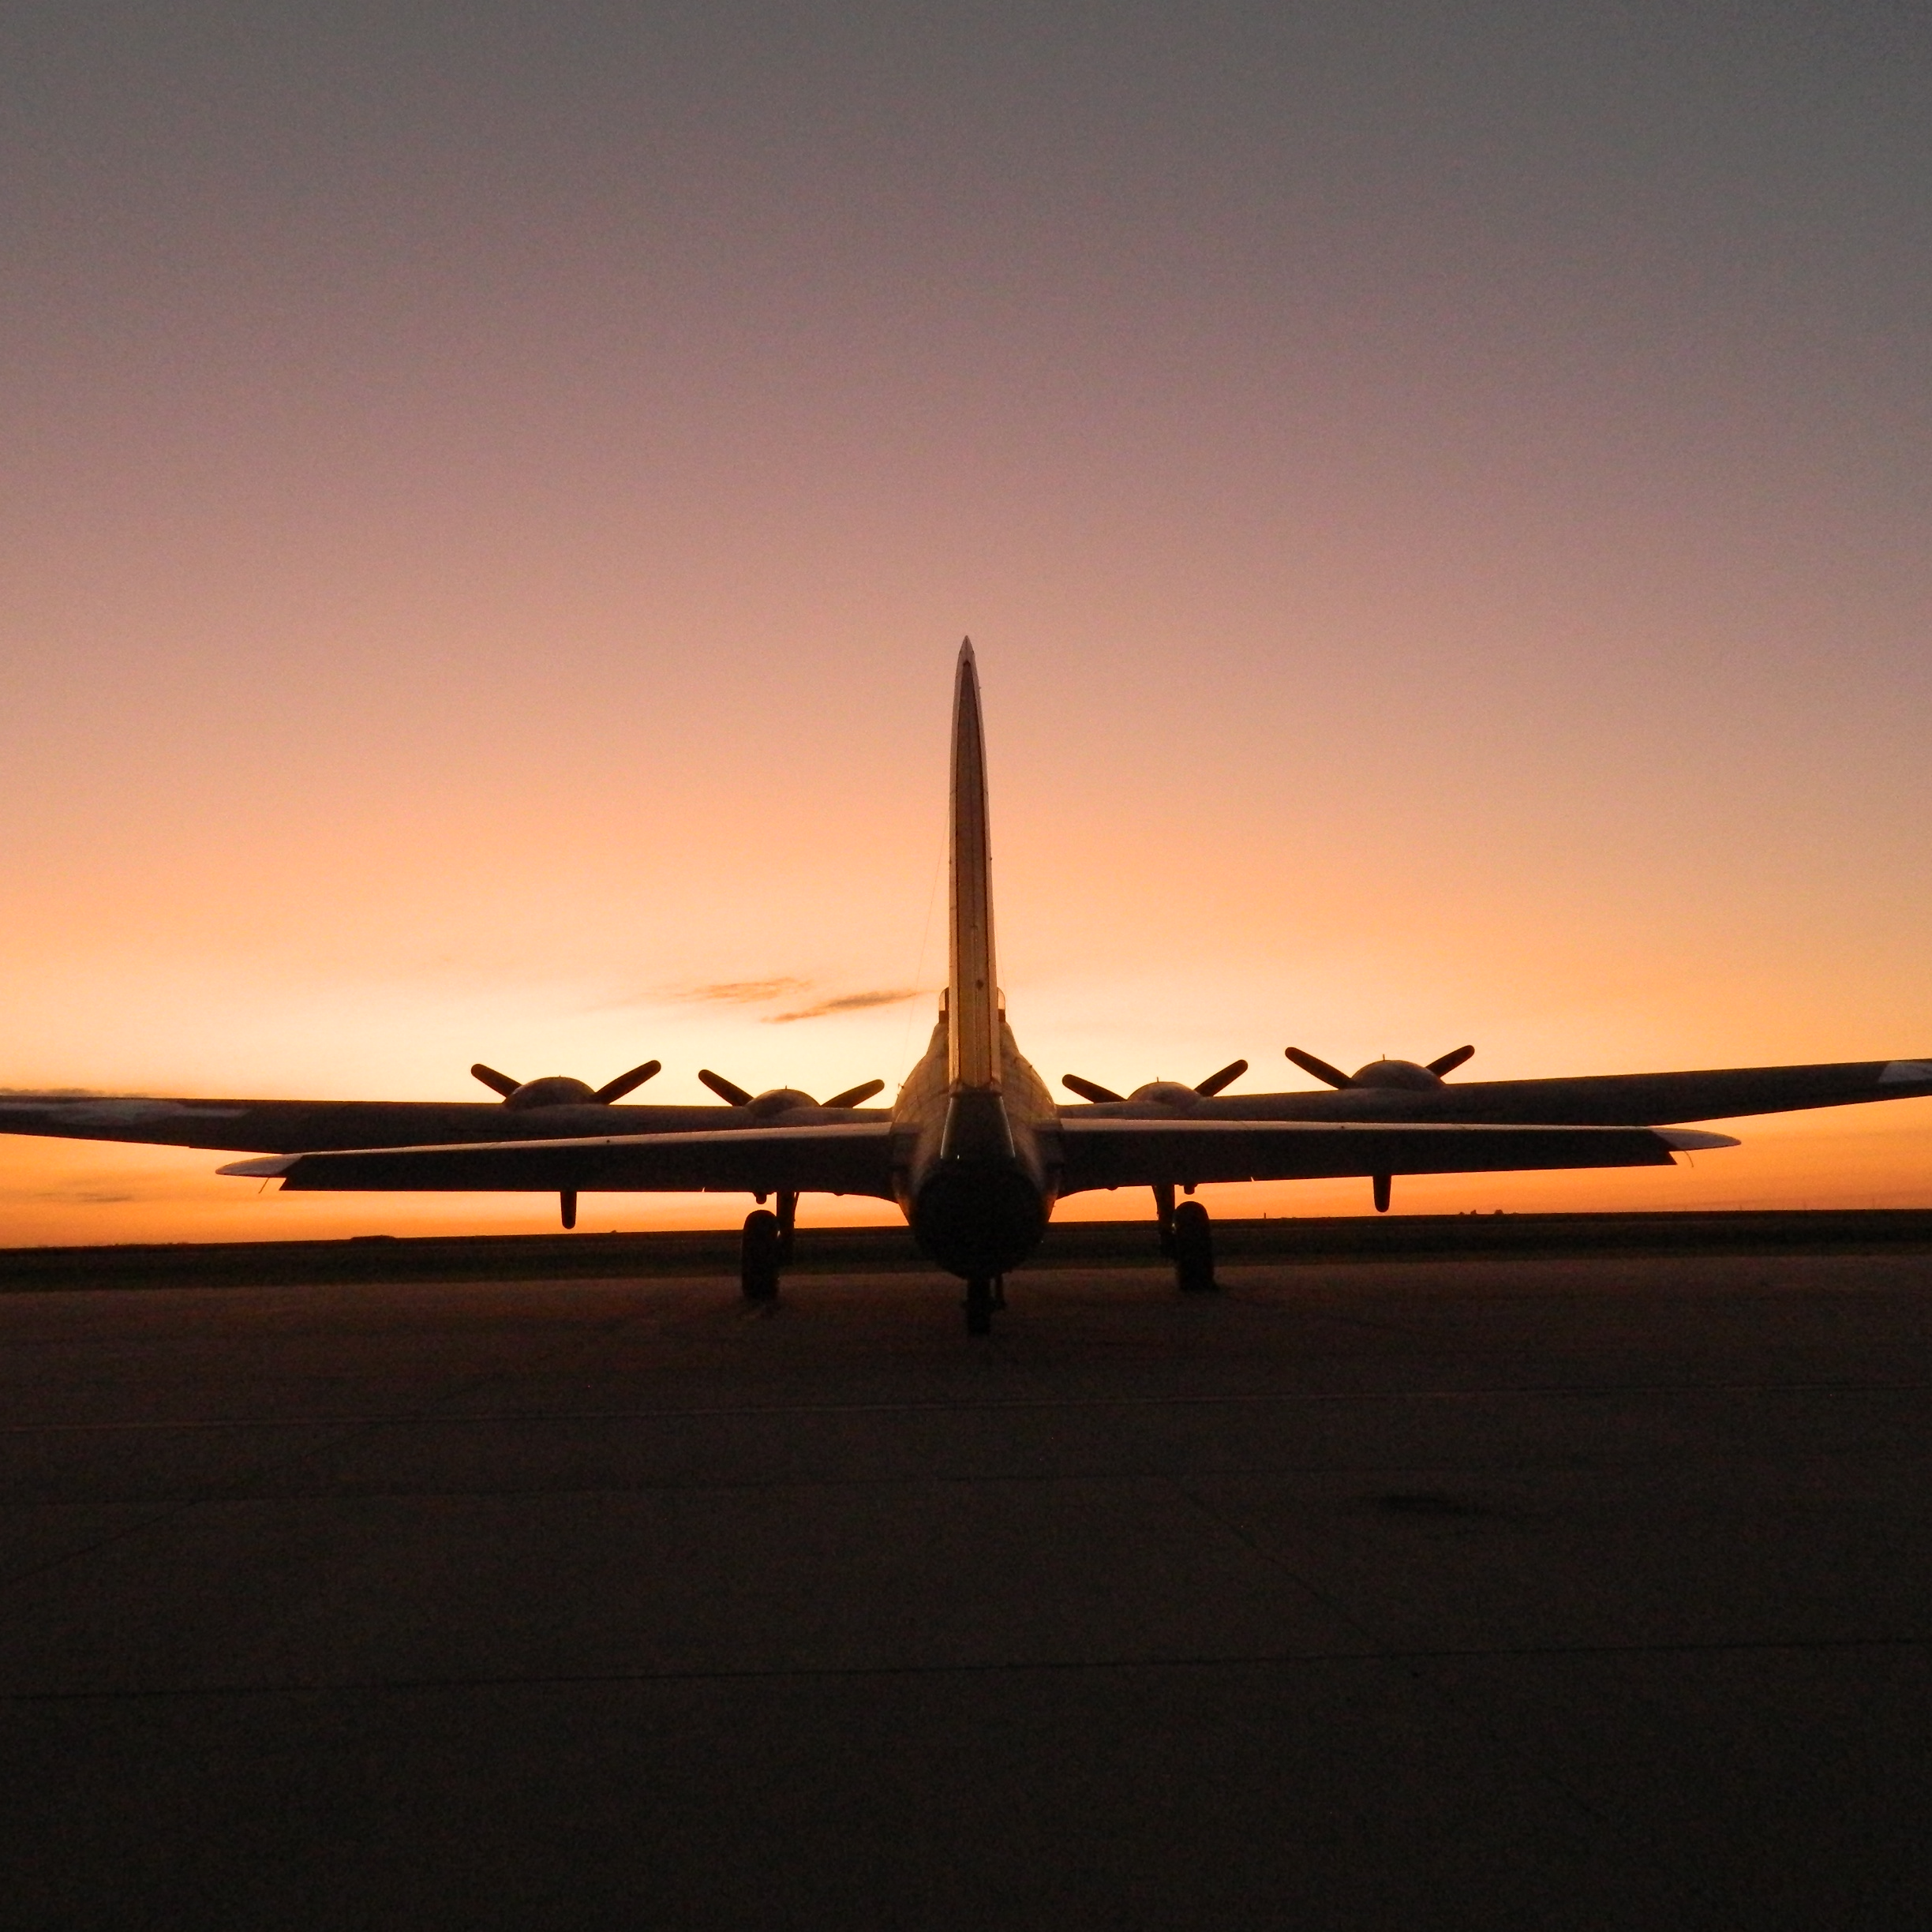 Photos of B-17 by Brian Rukes